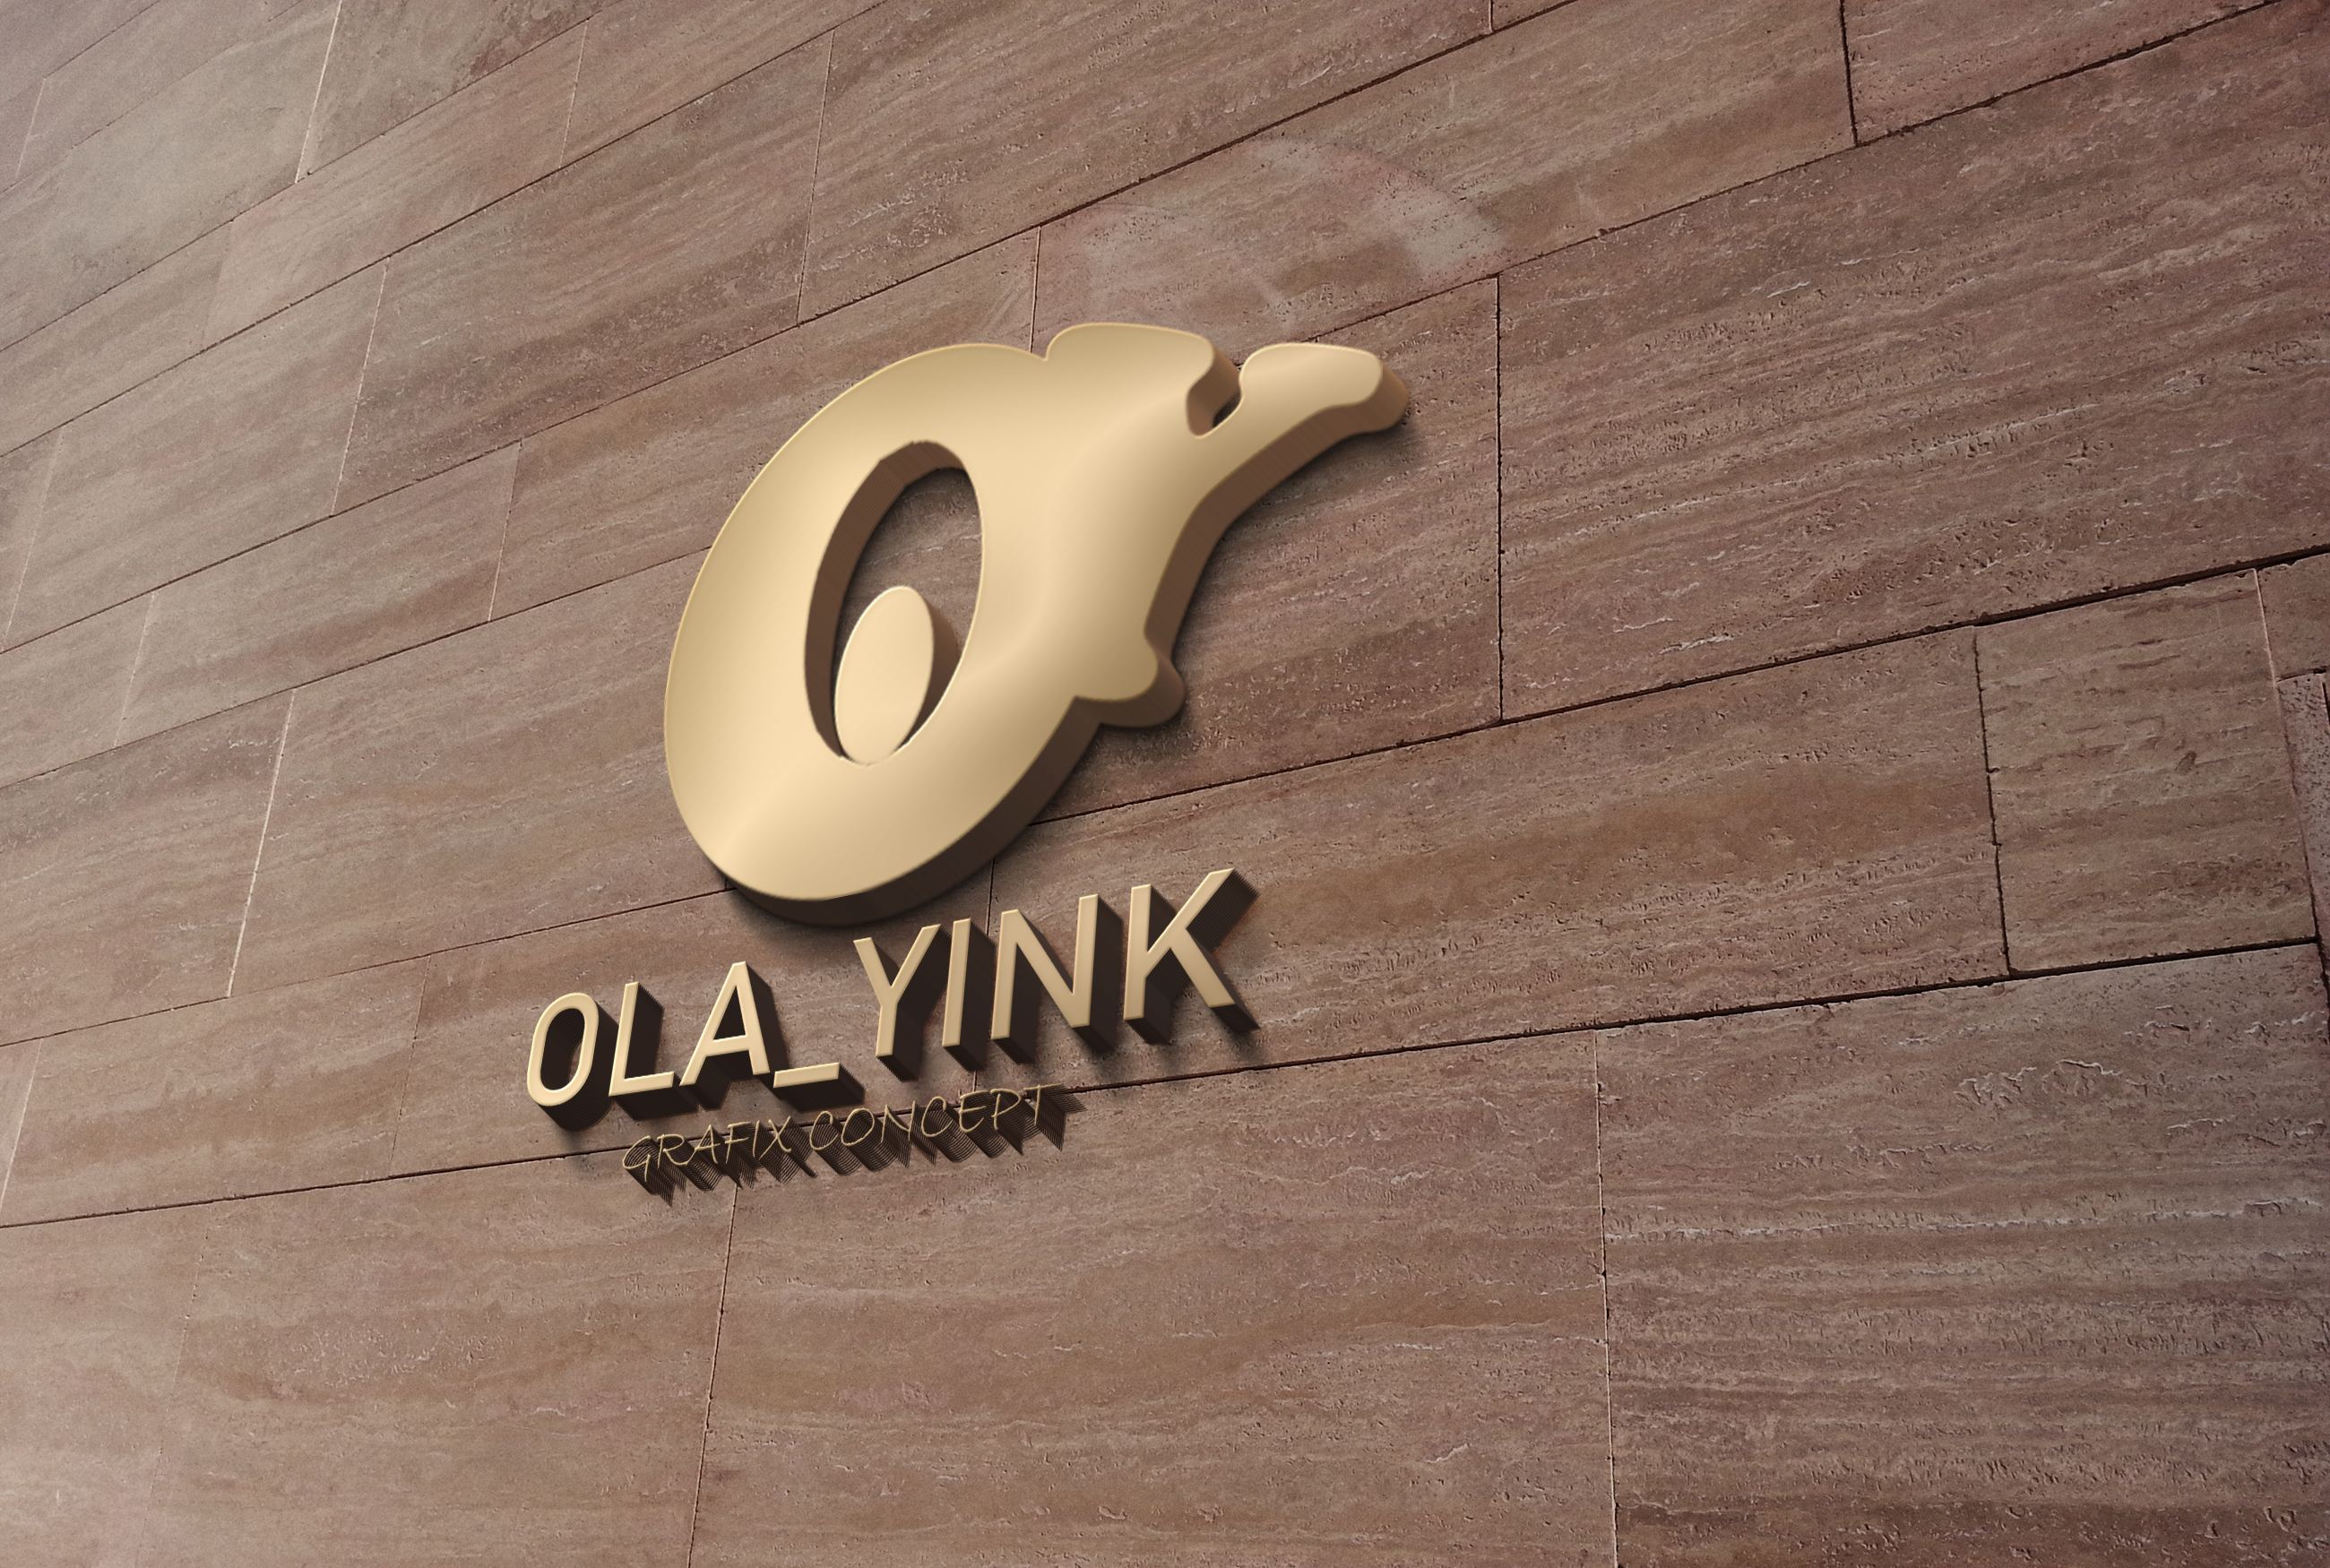 Olayink Graphic designer provider